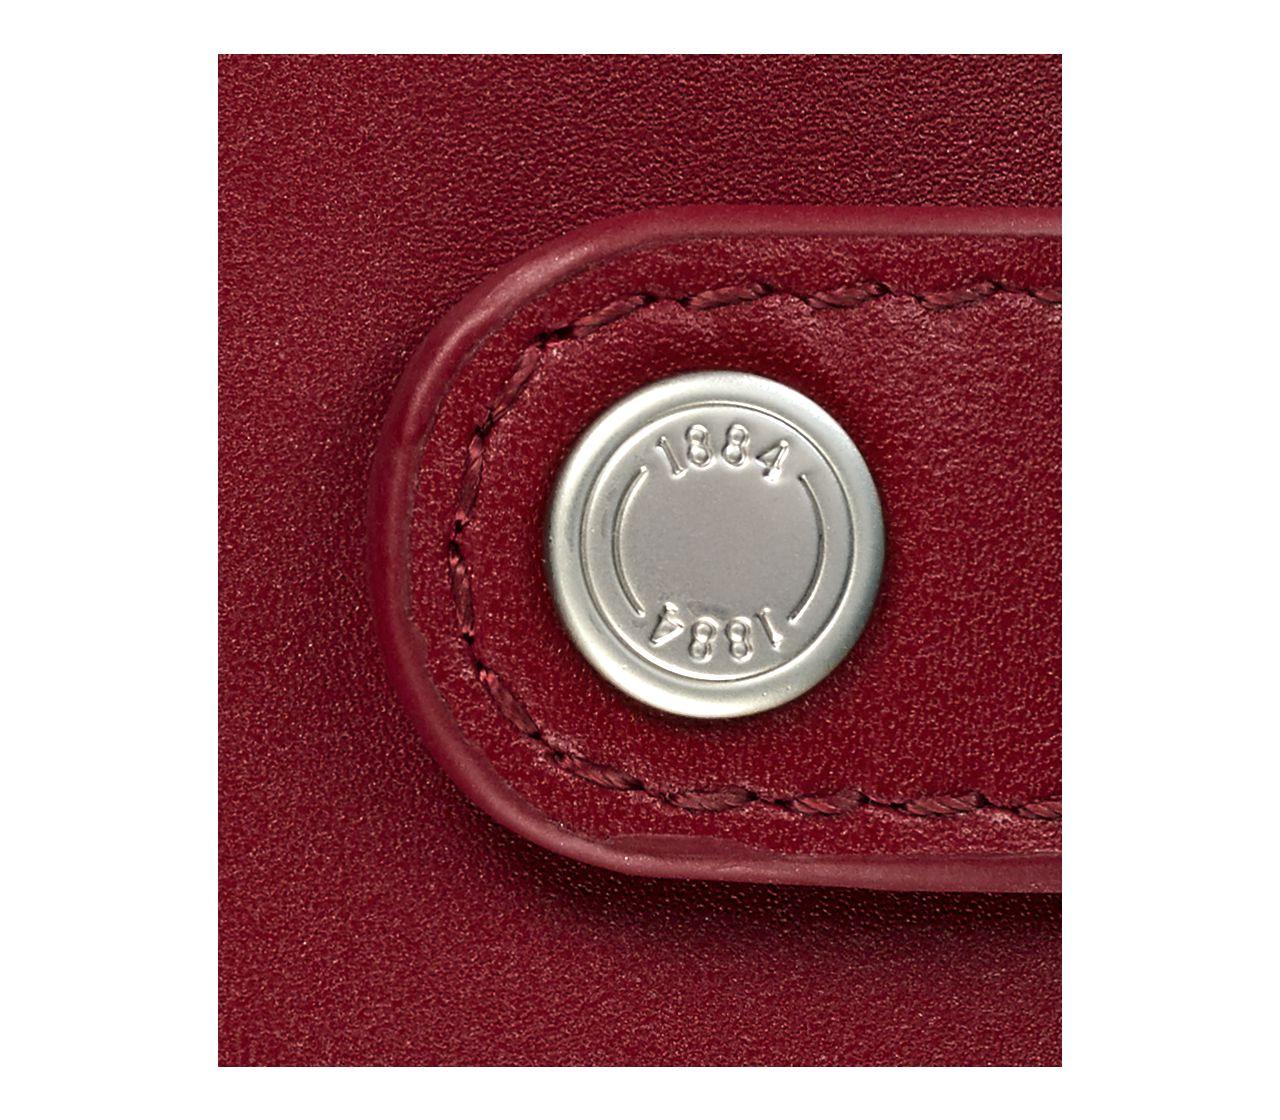 Altius Secrid Leather Card Wallet-612680